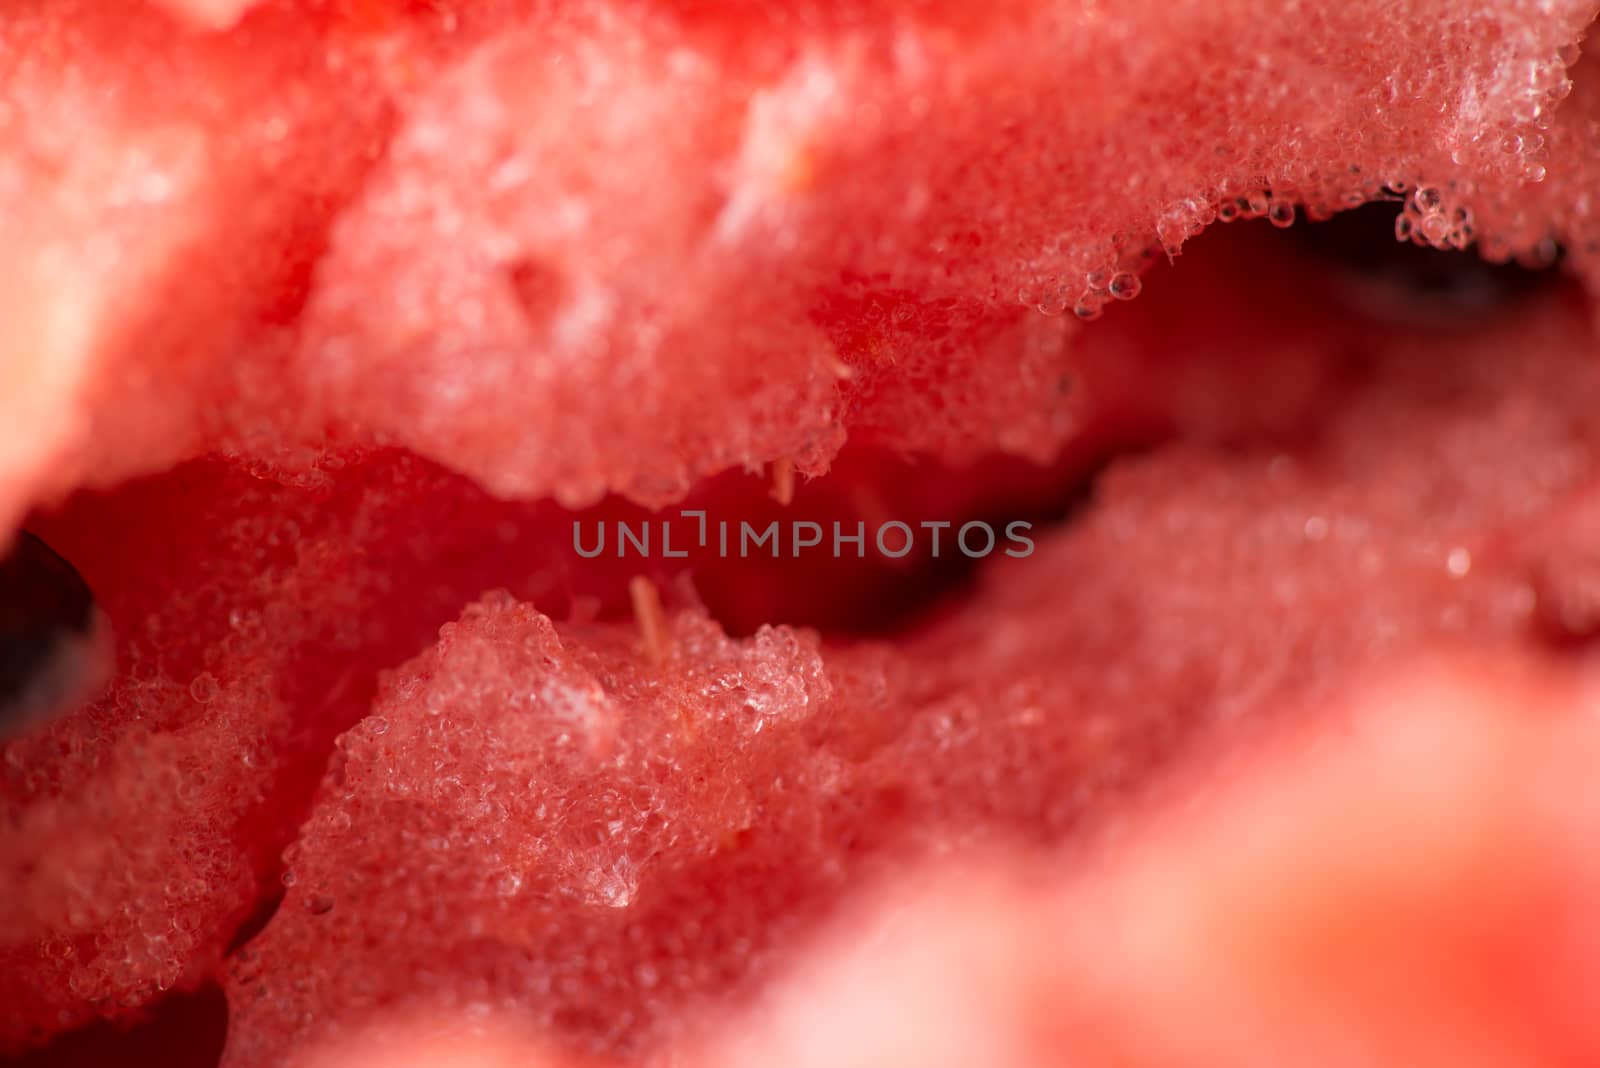 ripe watermelon flesh closeup macro texture background by skrotov